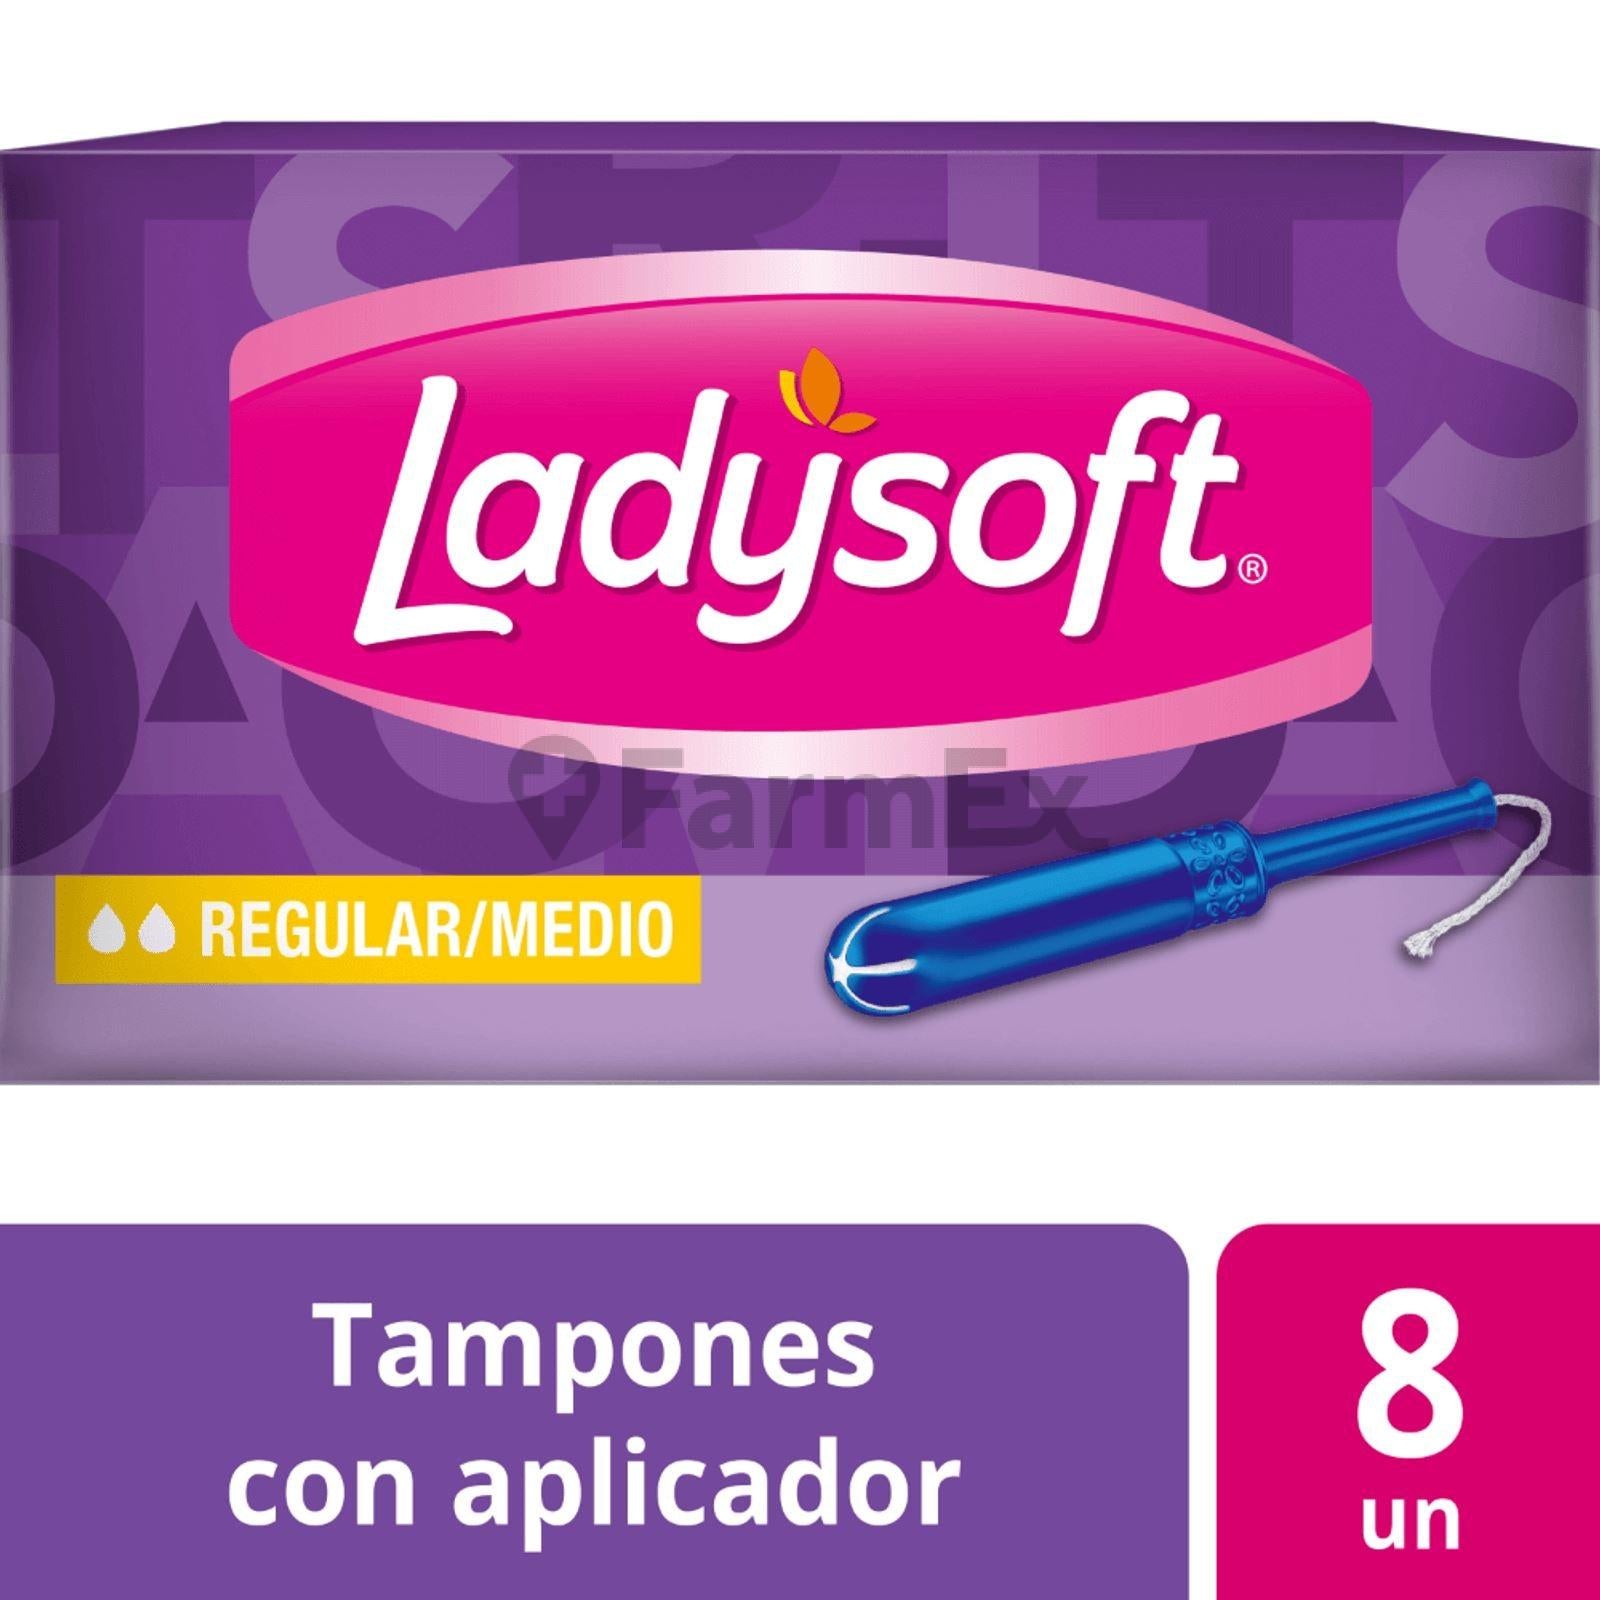 Ladysoft / Medio" x 8 tampones